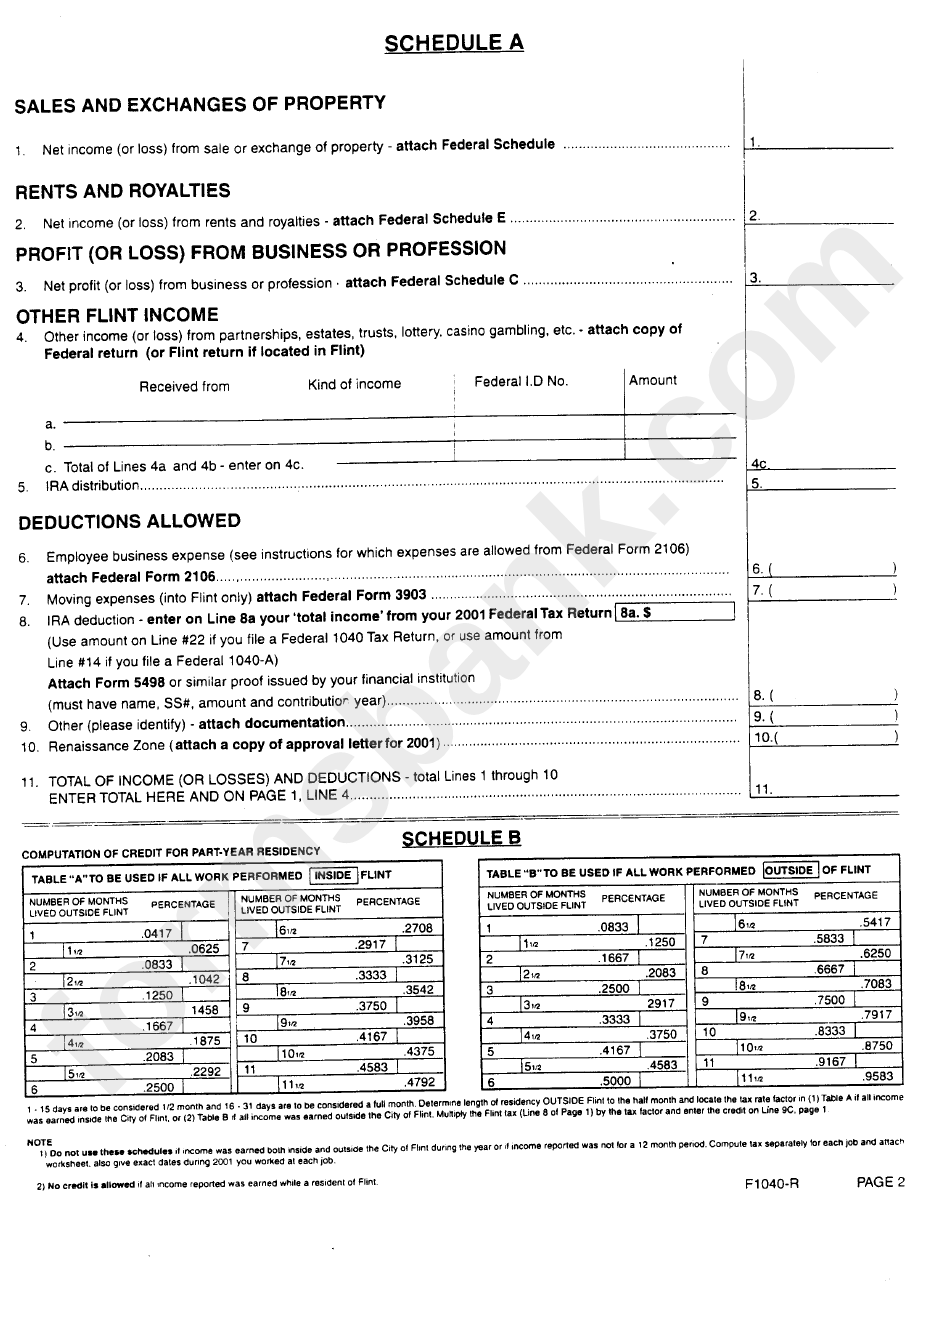 Form F-1040-R - Resident Individual Income Tax Return - City If Flint